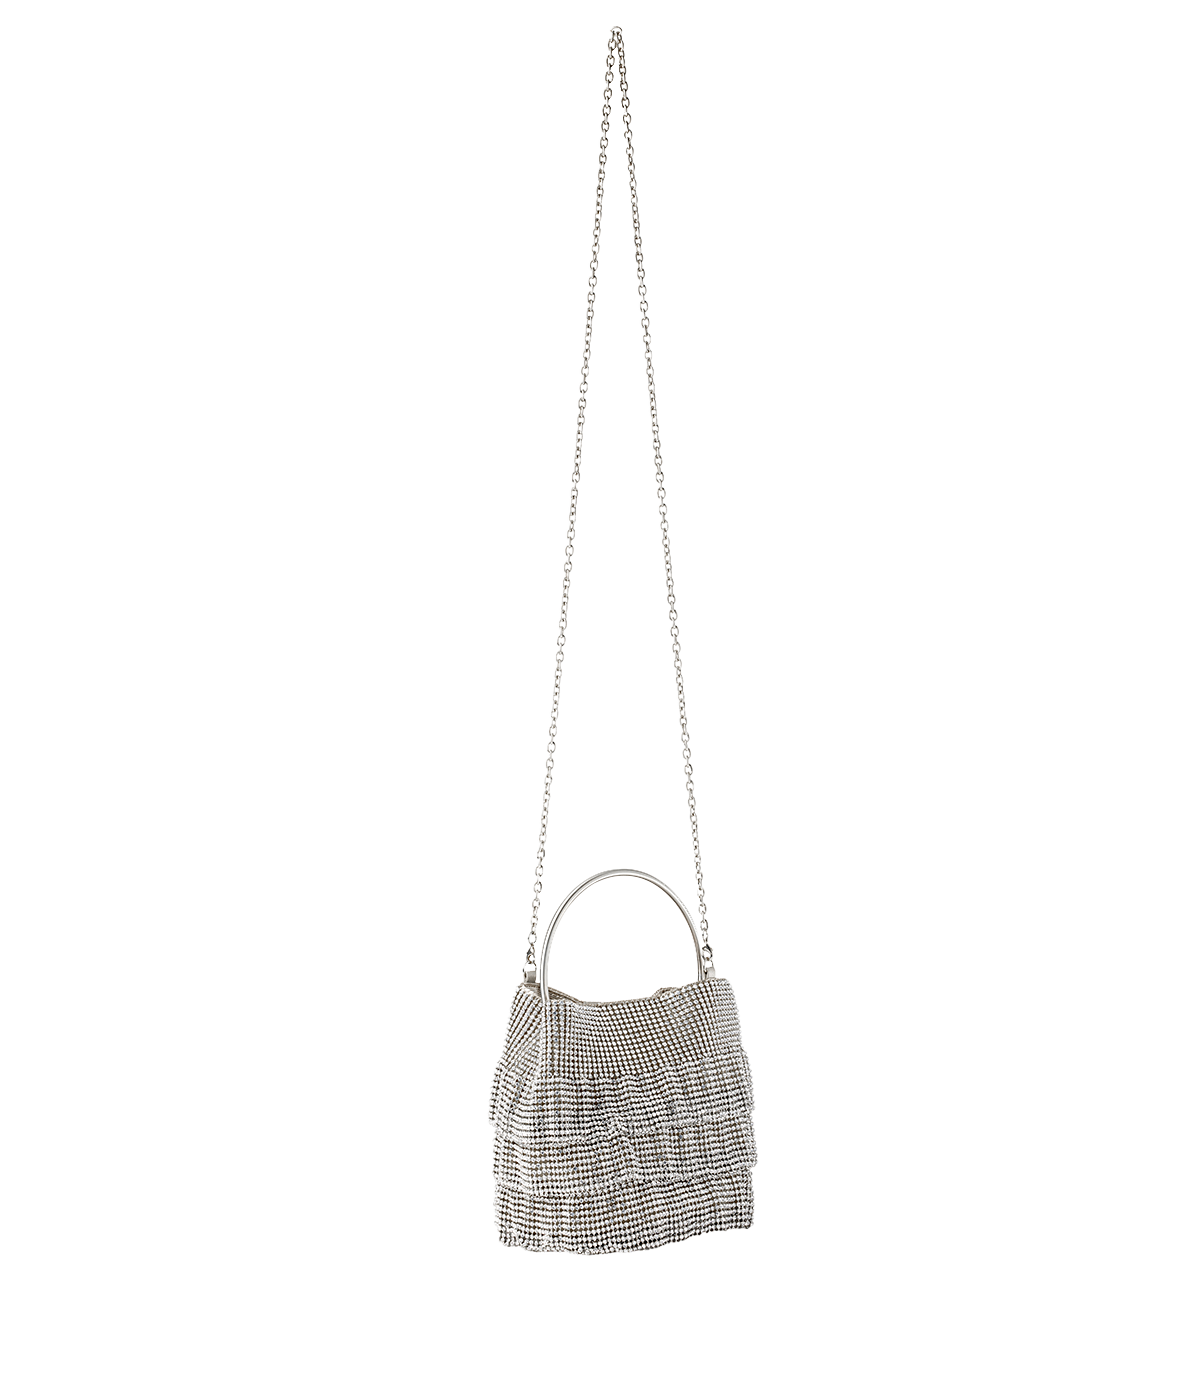 Soleil Ruffle Bucket Bag in Crystal